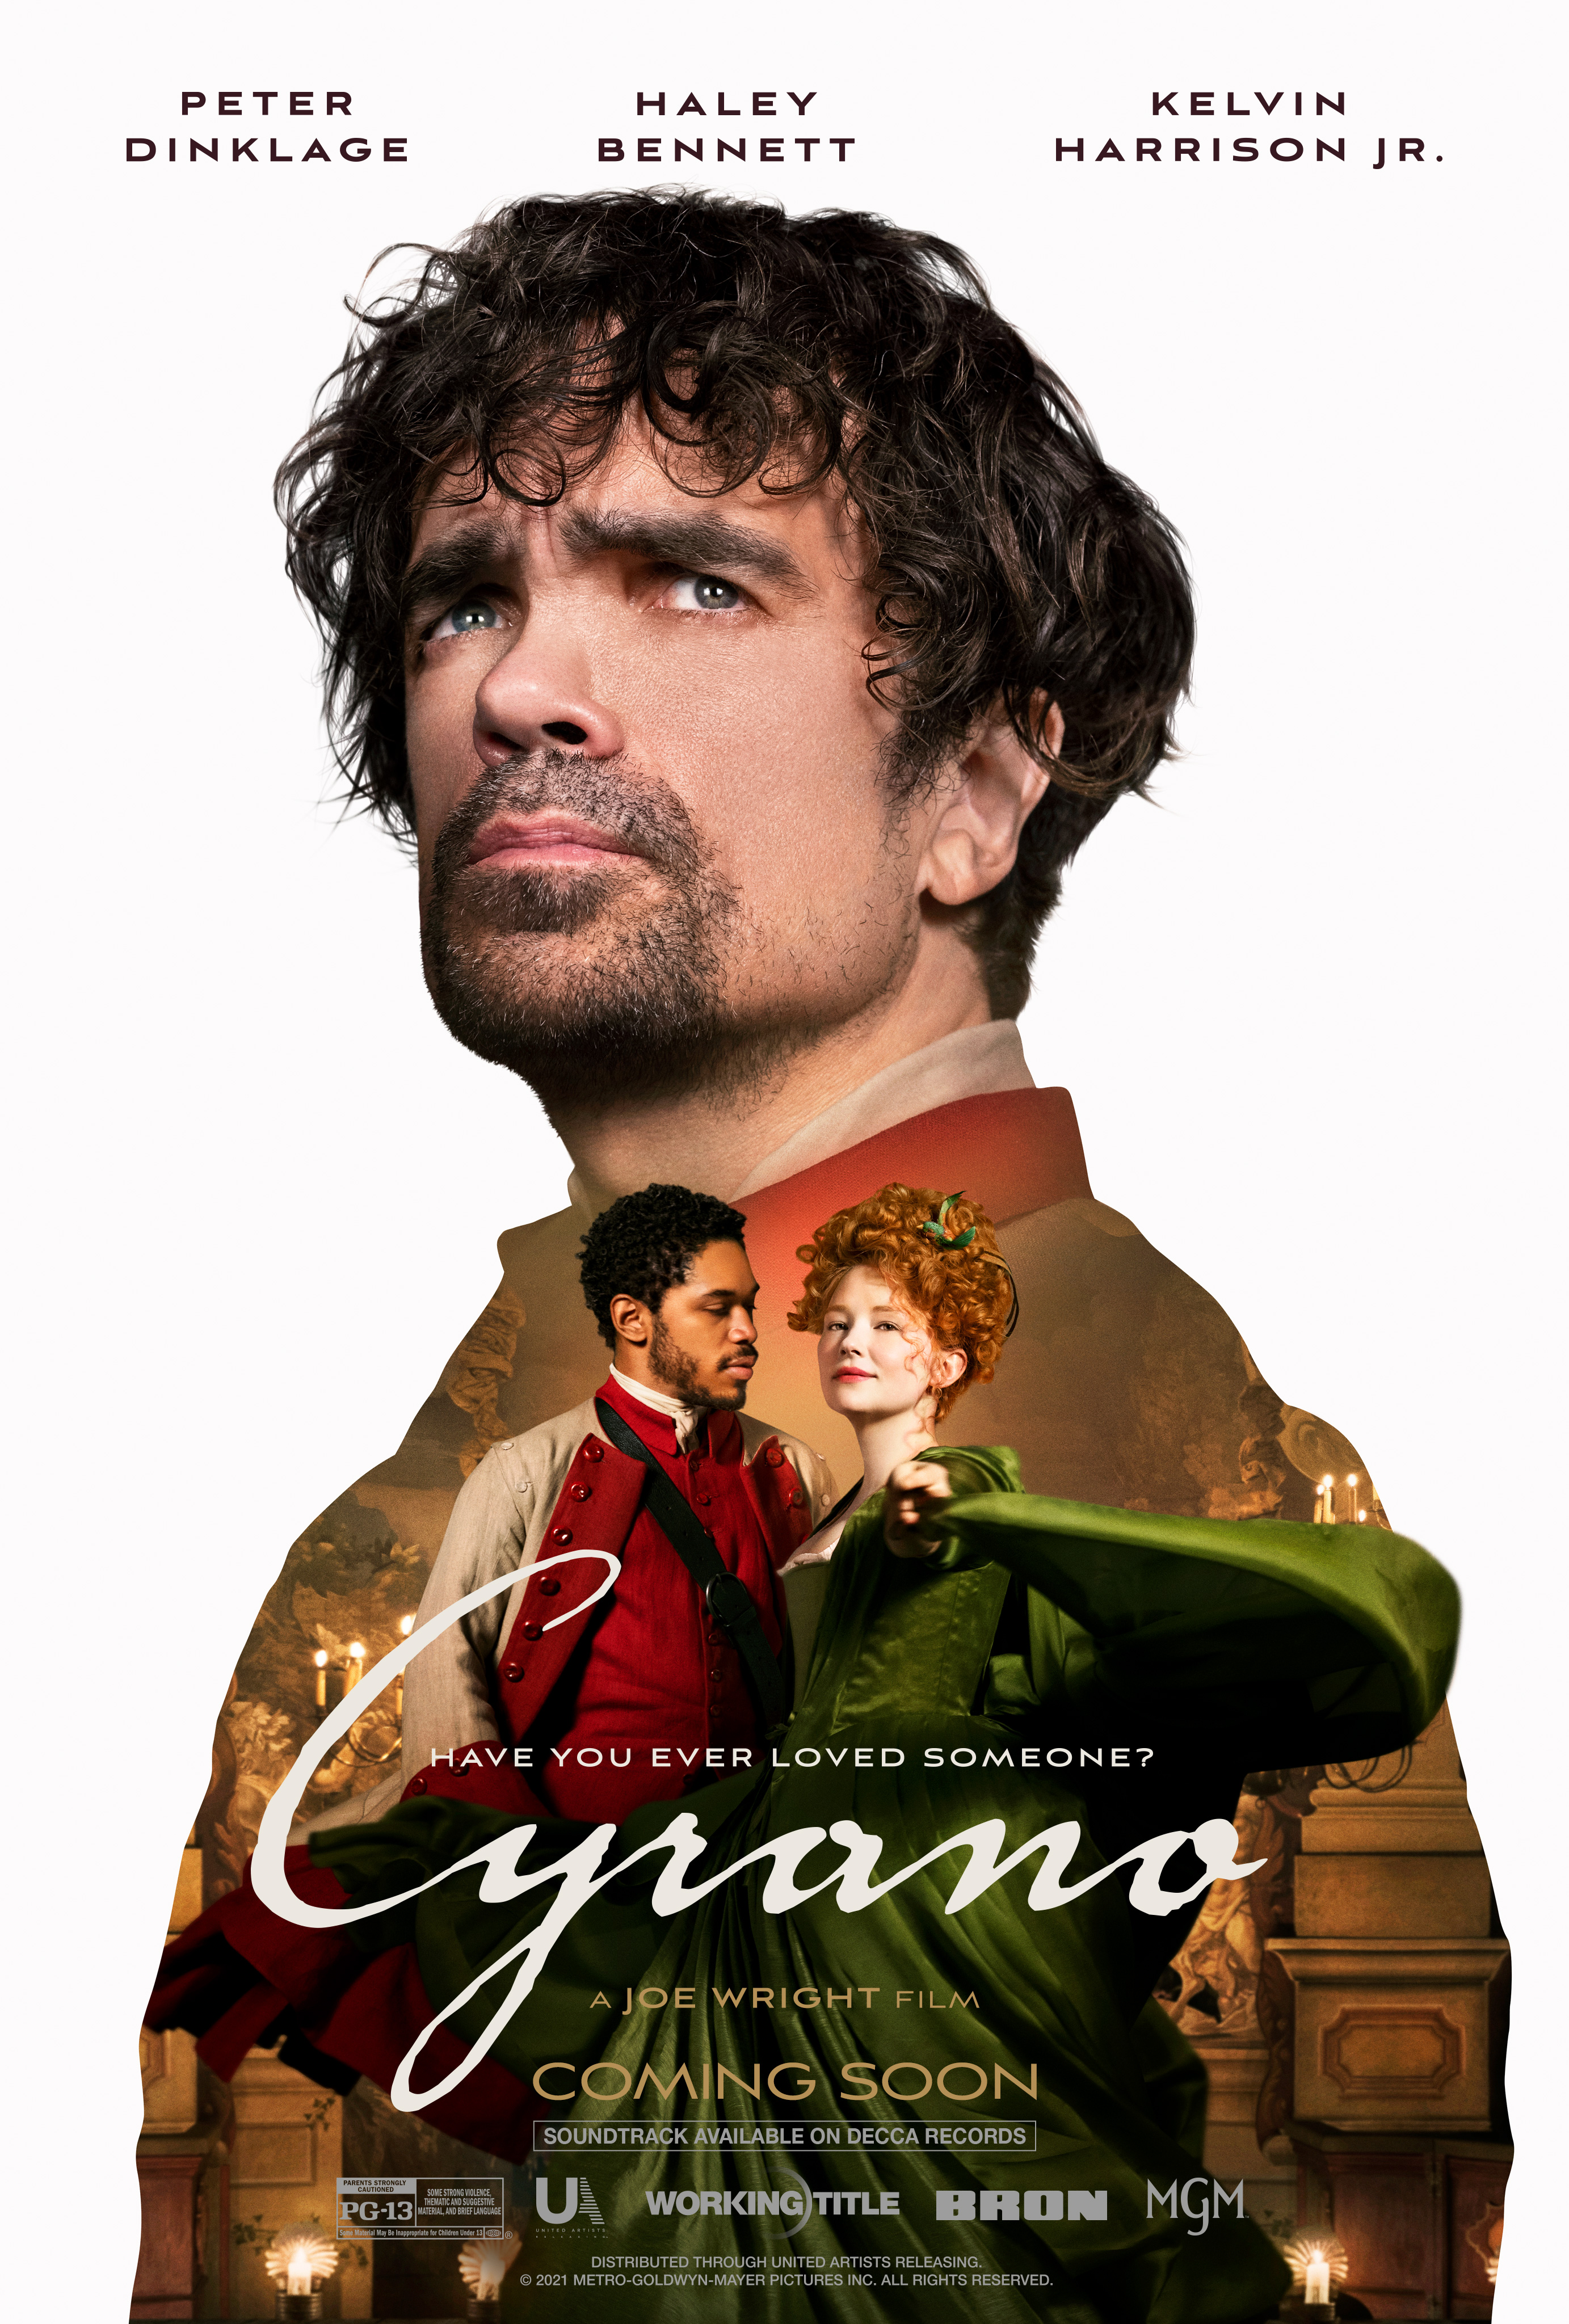 Cover Art for "Cyrano"